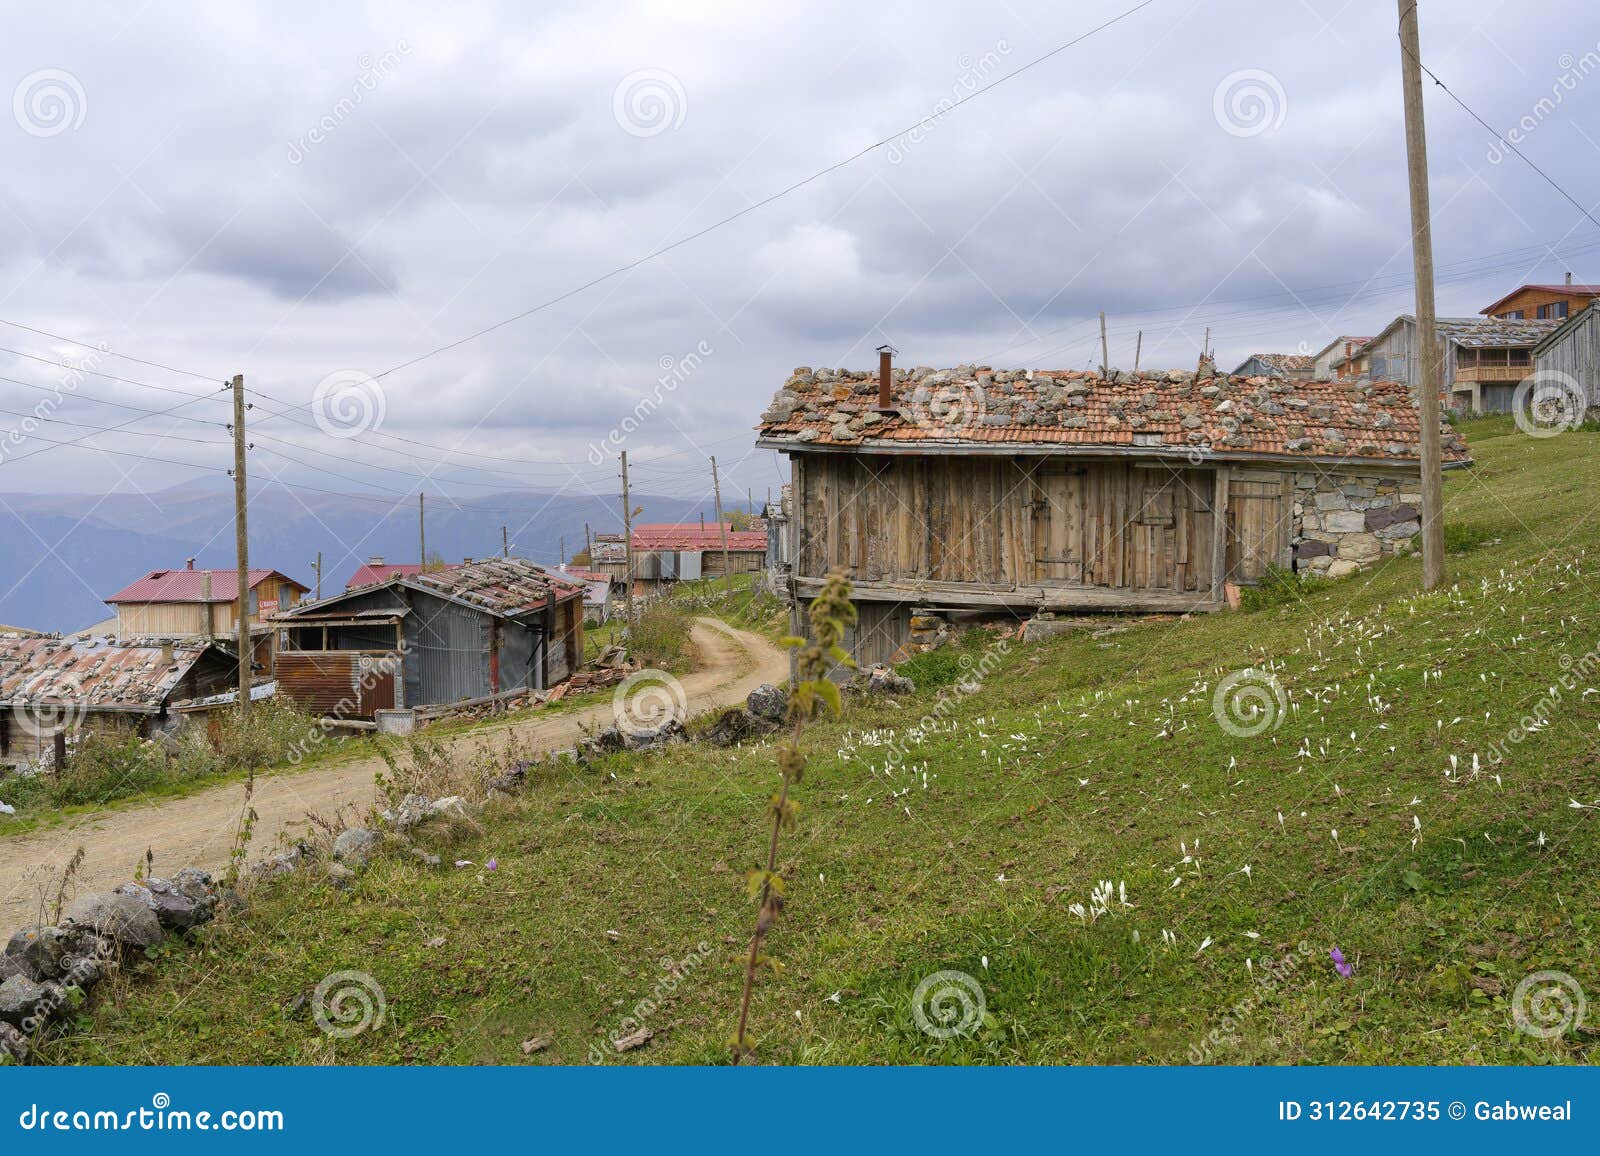 mountain village on the karester yalas plateau, trabzon, turkey